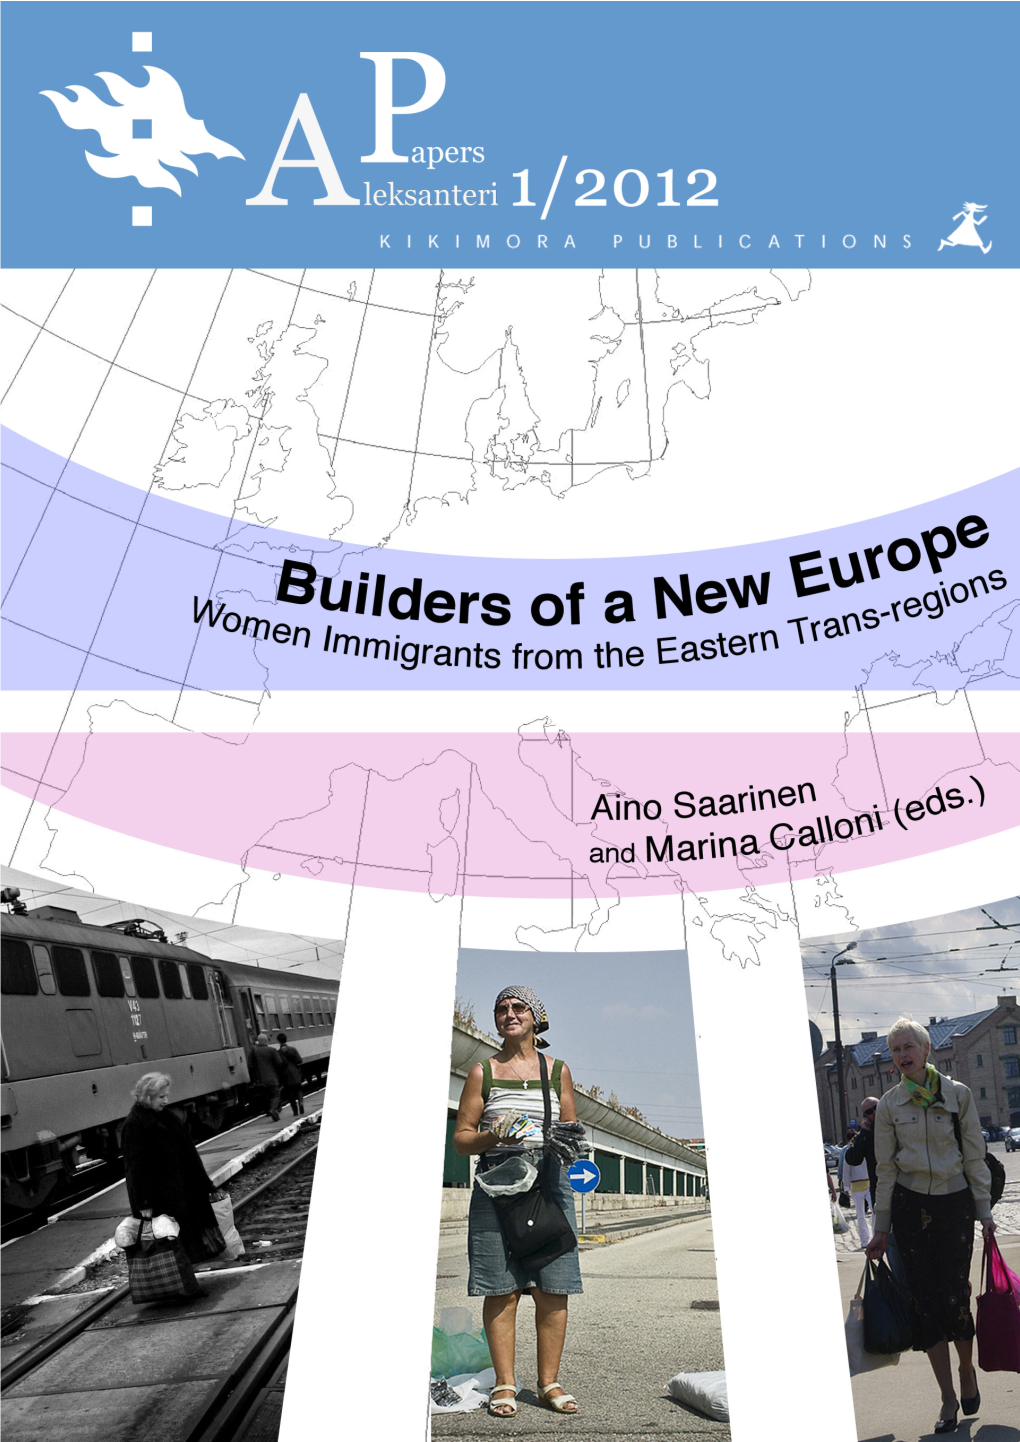 Aino Saarinen and Marina Calloni (Eds.): BUILDERS of a NEW EUROPE